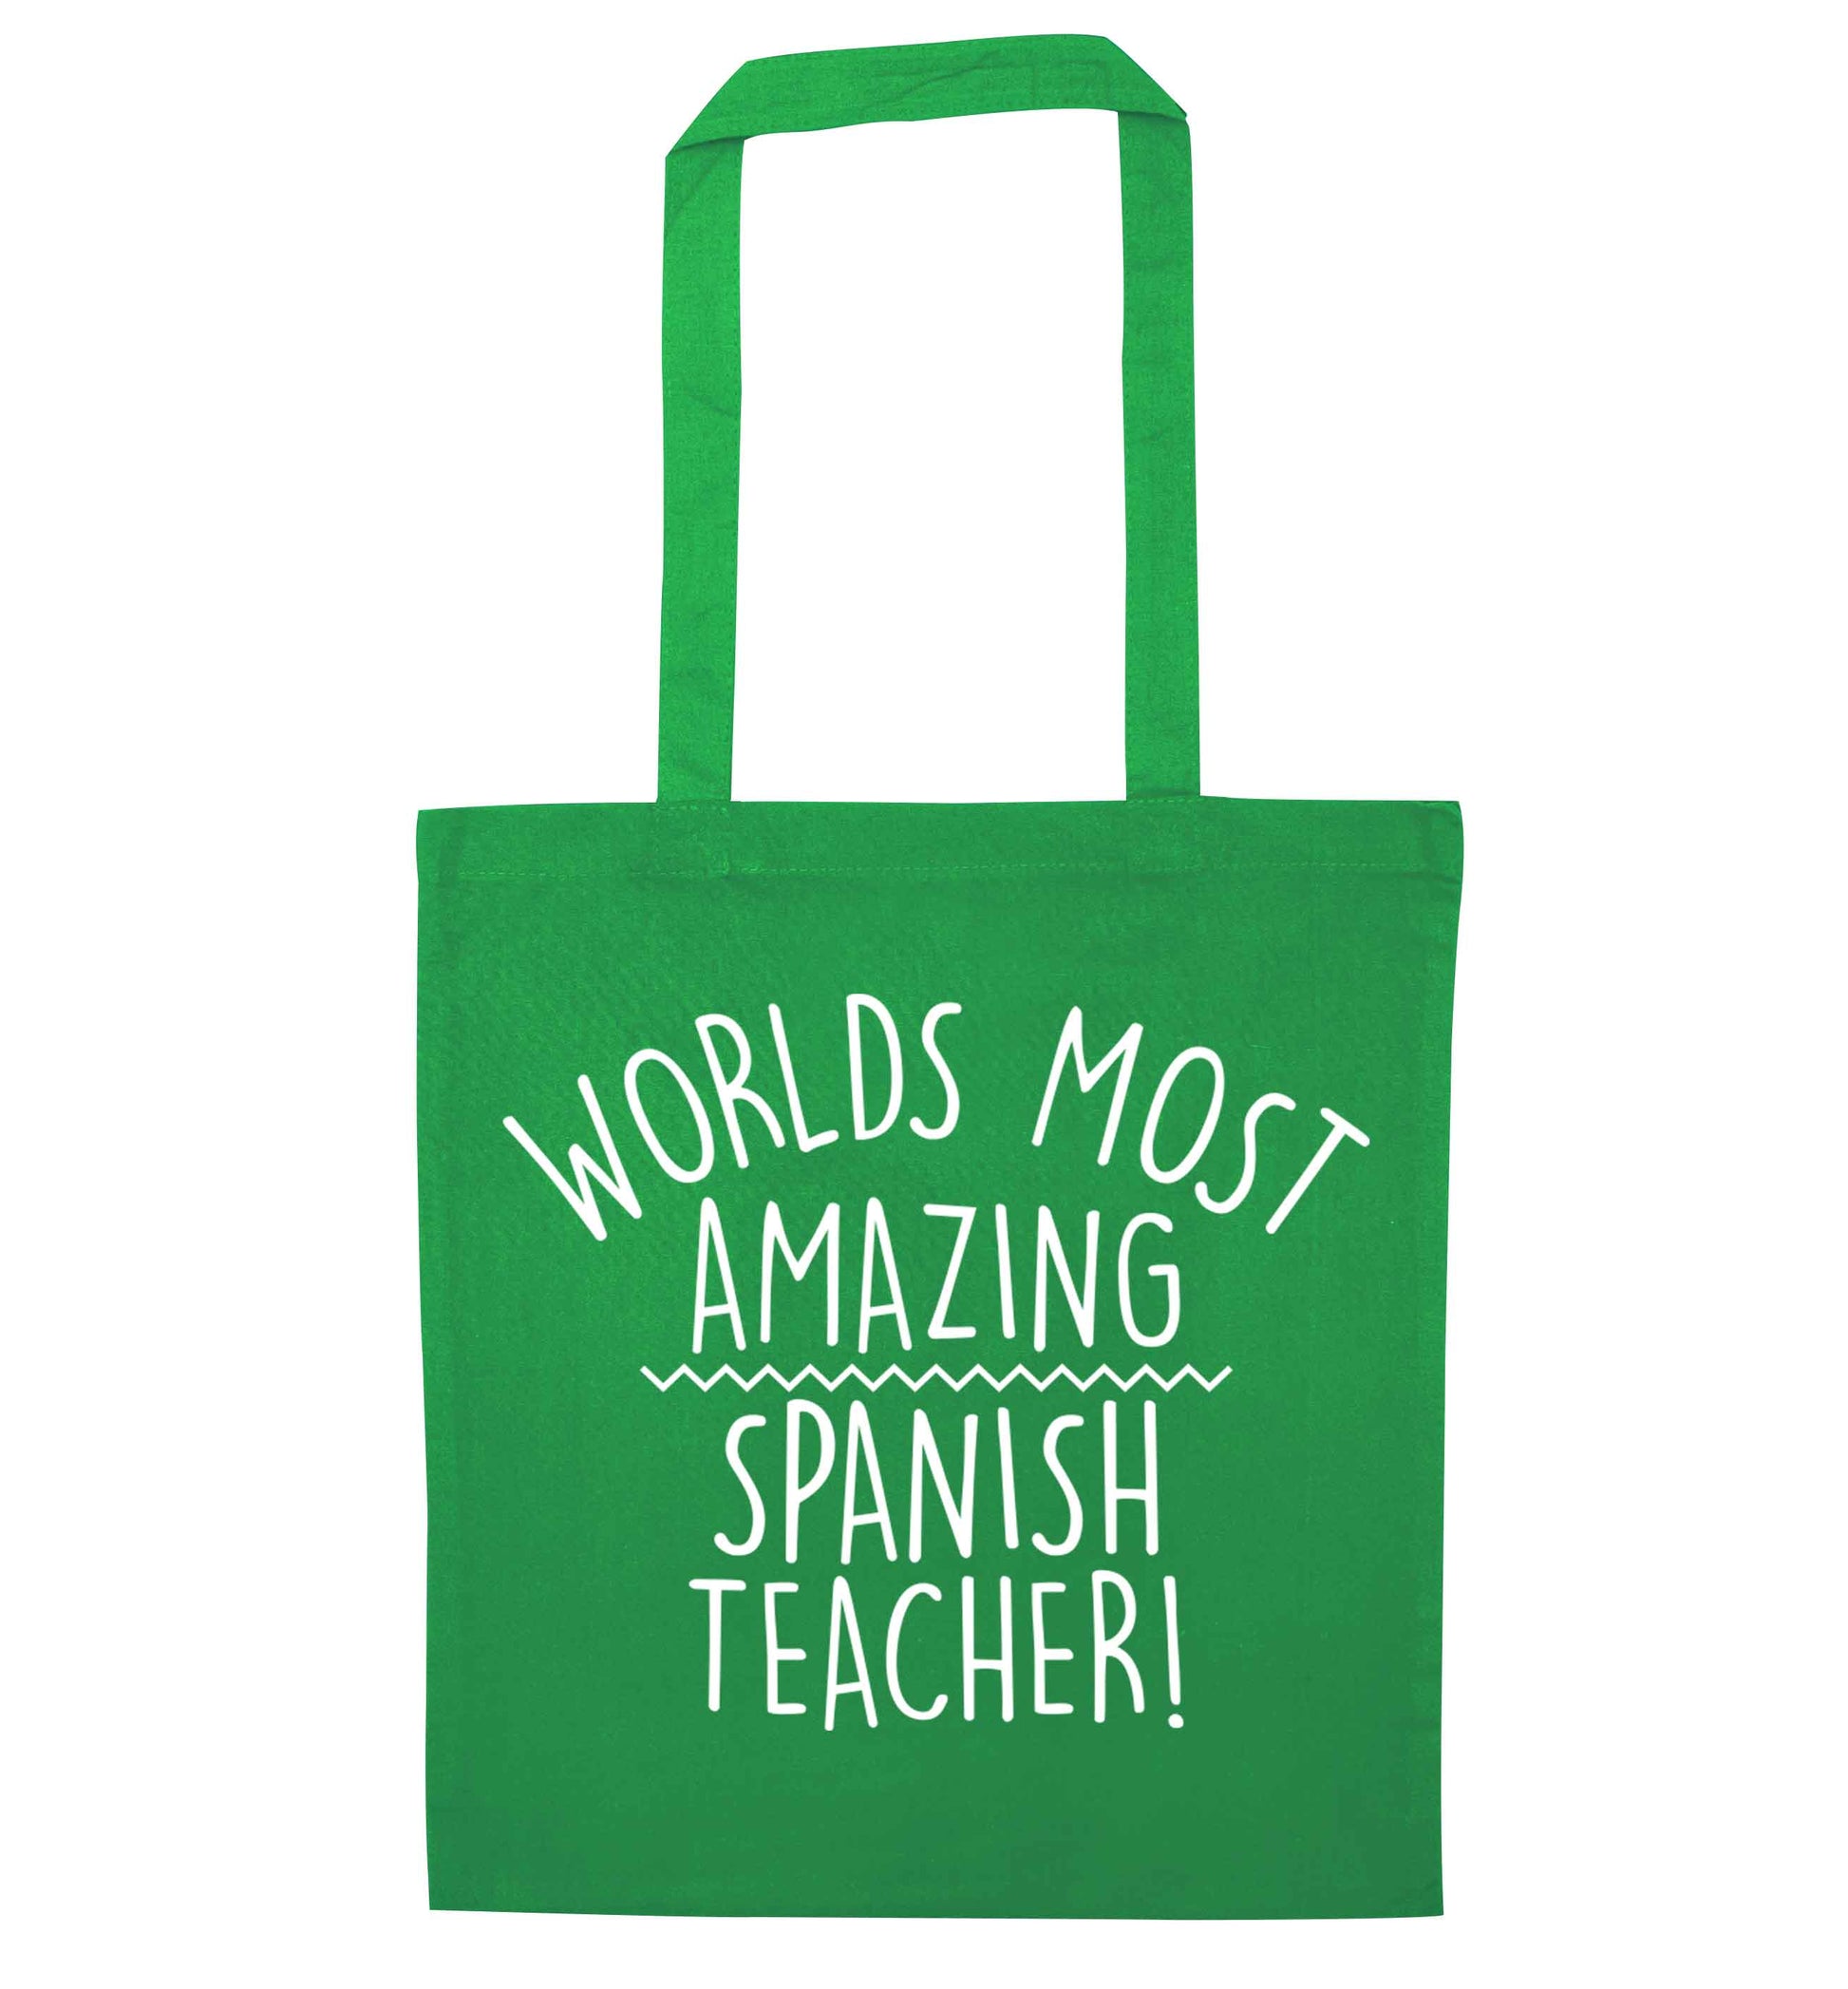 Worlds most amazing Spanish teacher green tote bag